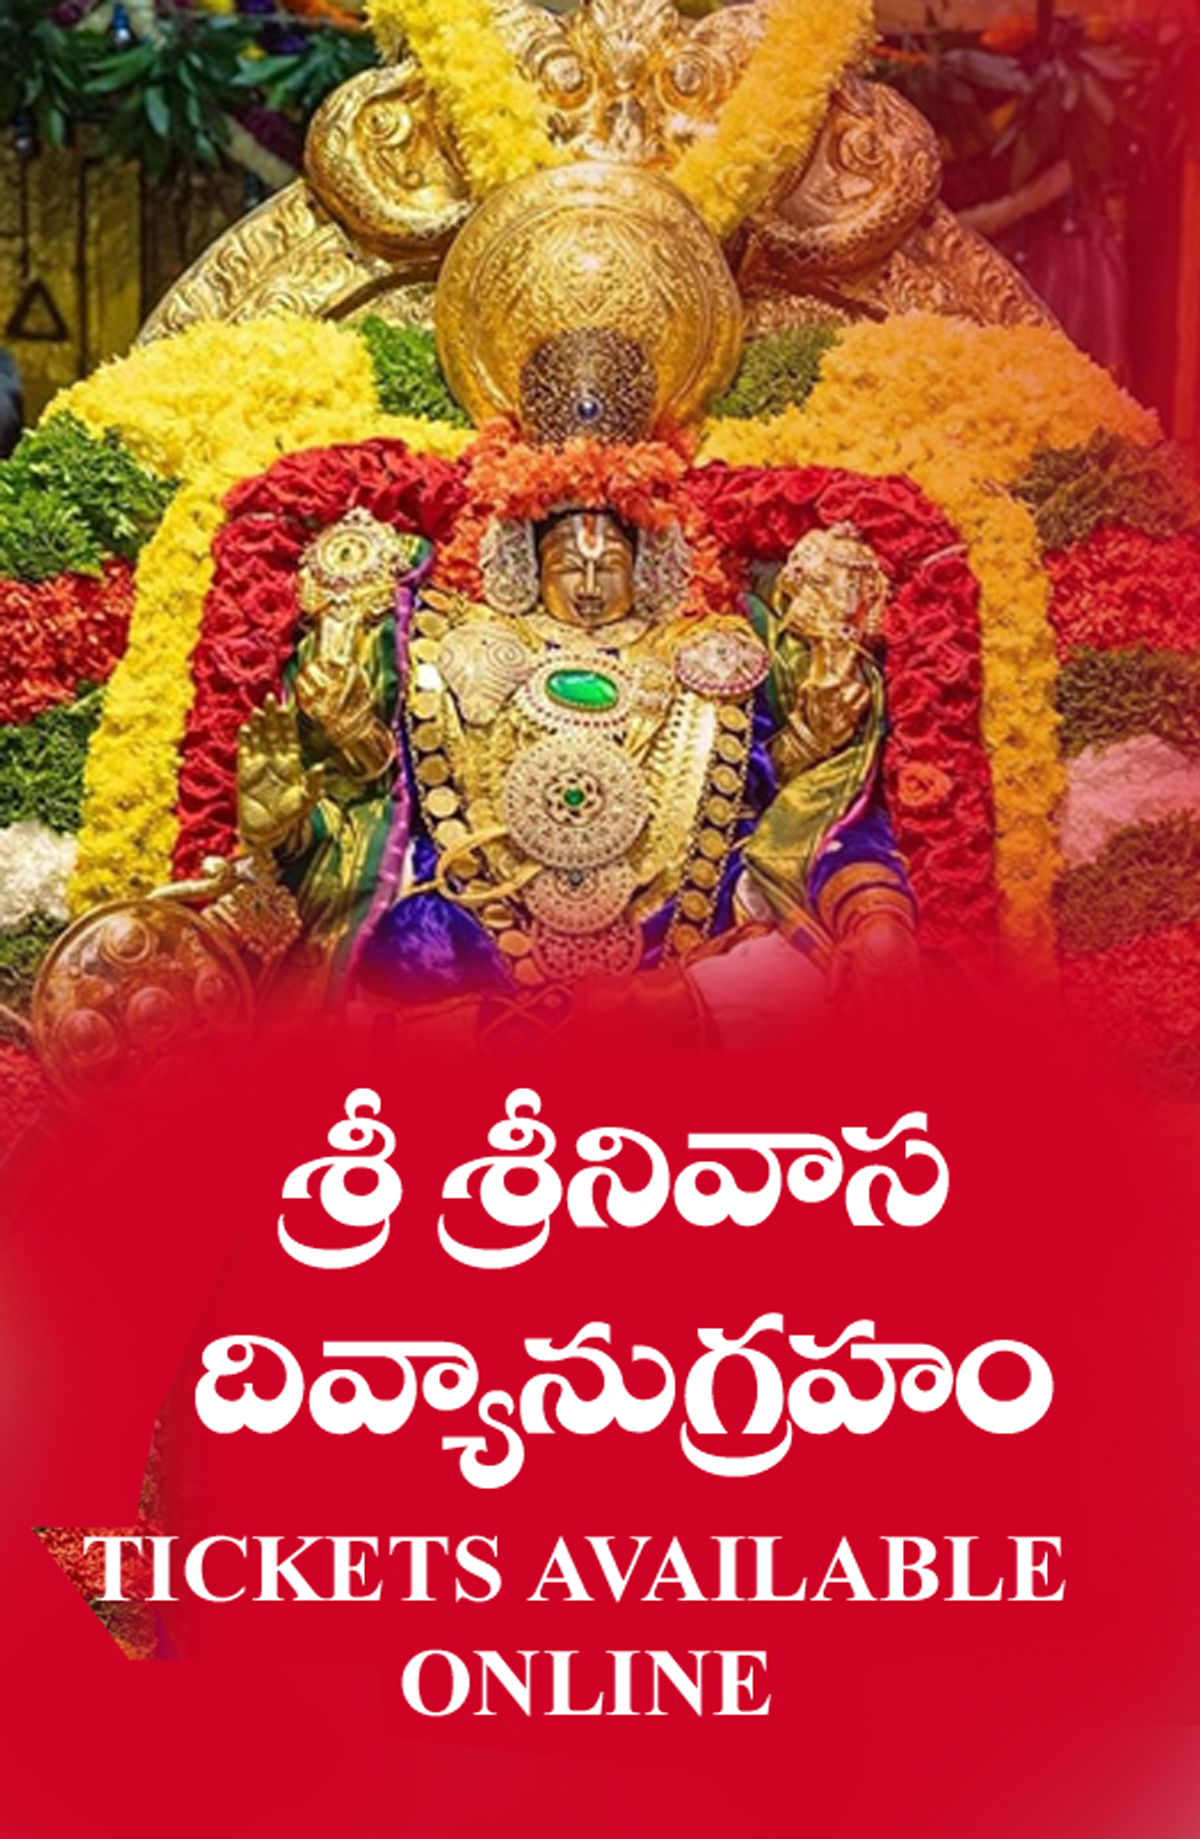 Sri Srinivasa Divyanugraha Homam Tickets Available Online